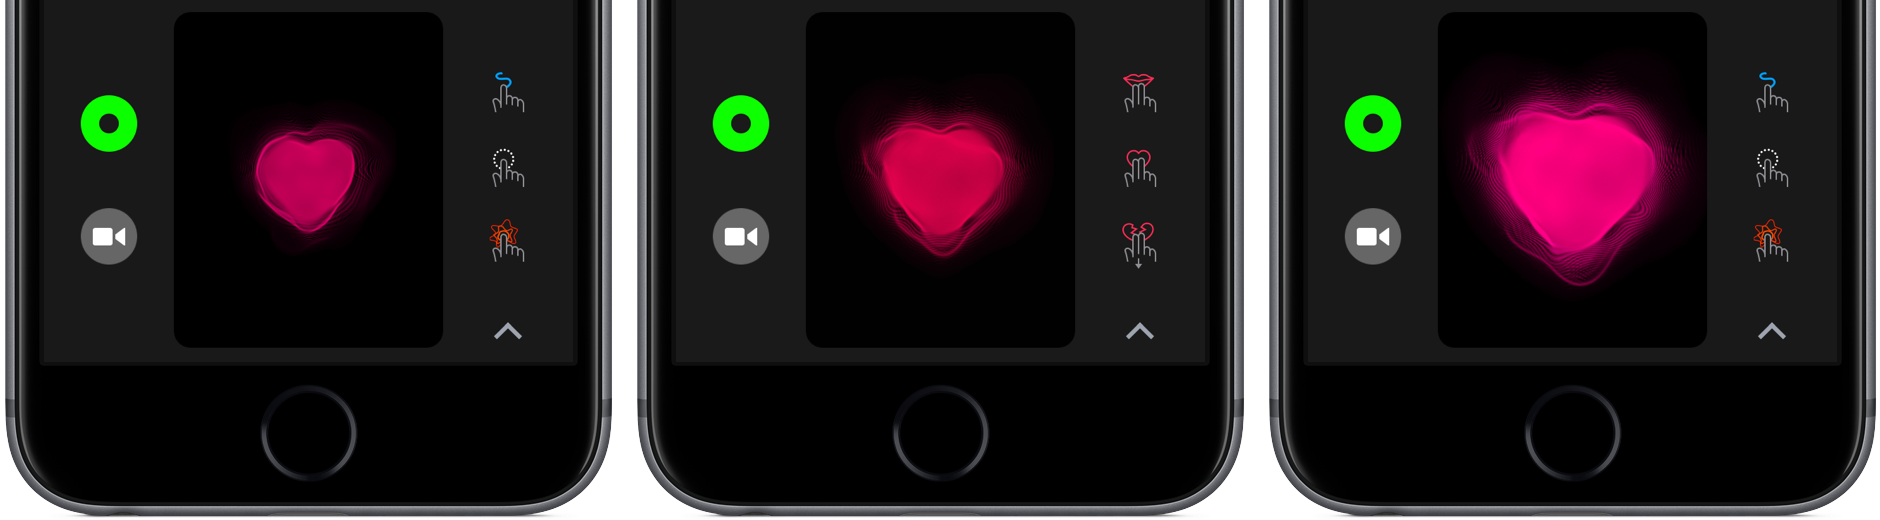 iOS 10 Digital Touch heartbeat iPhone screenshot 002